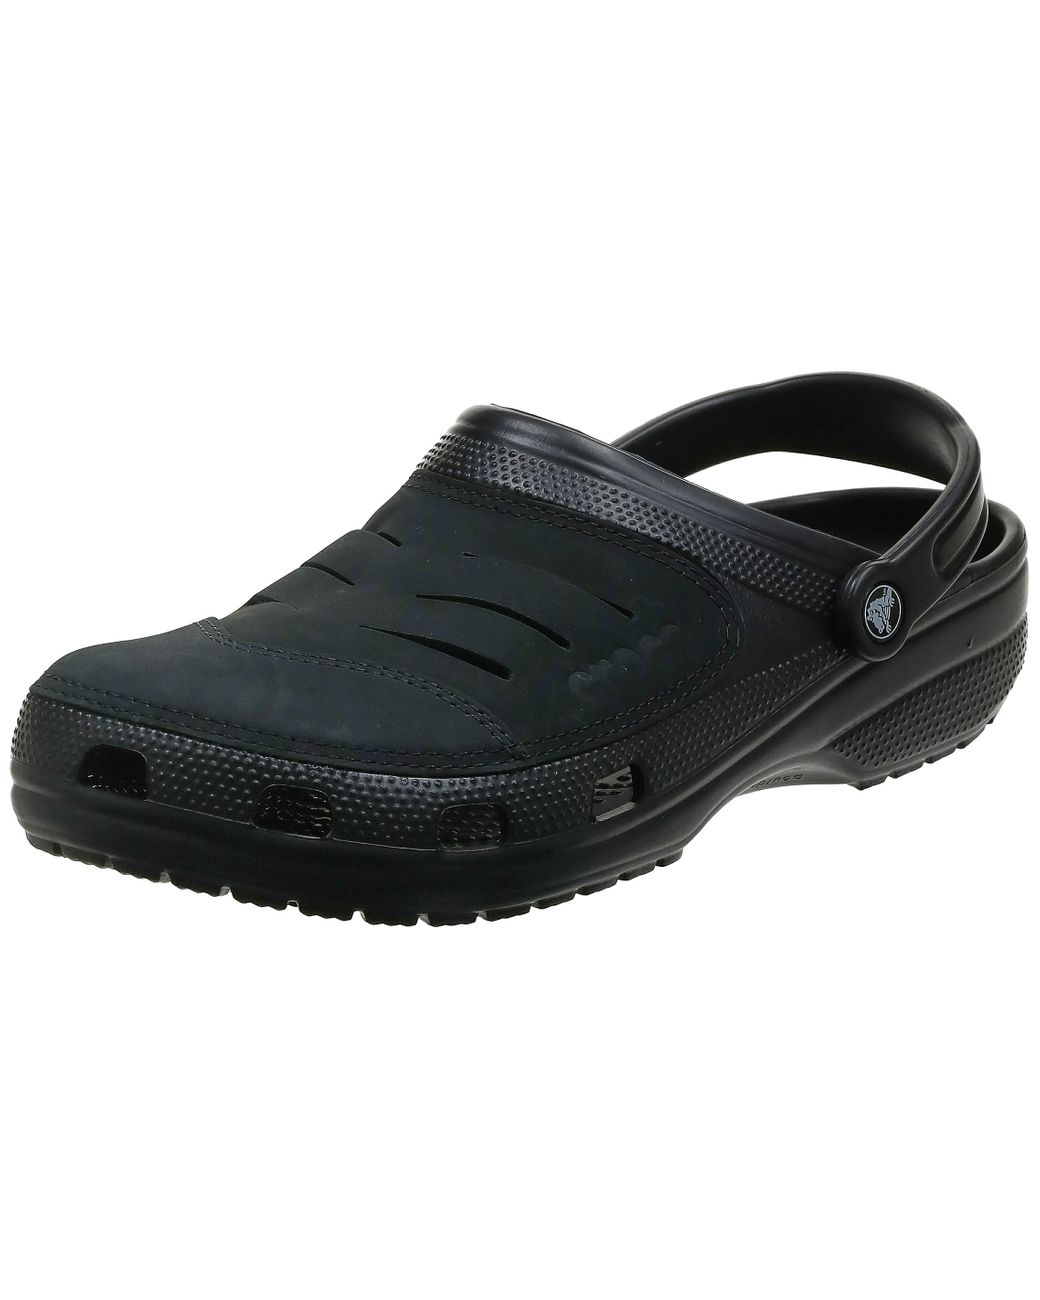 Crocs™ Bogota Clog in Black/Black (Brown) for Men - Save 50% - Lyst